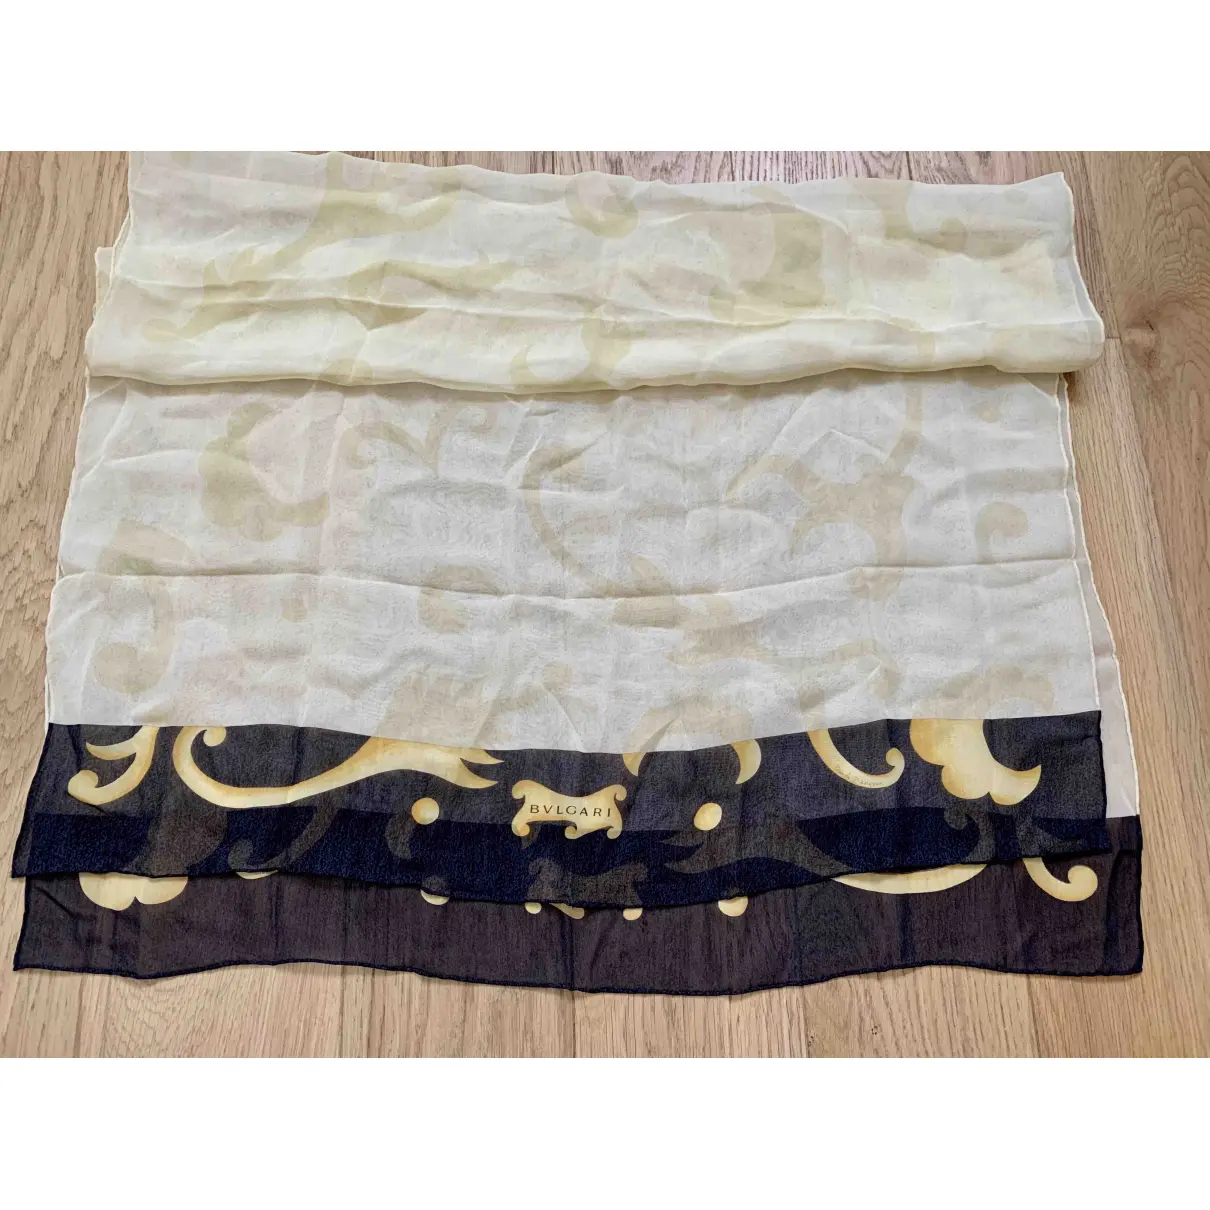 Buy Bvlgari Silk handkerchief online